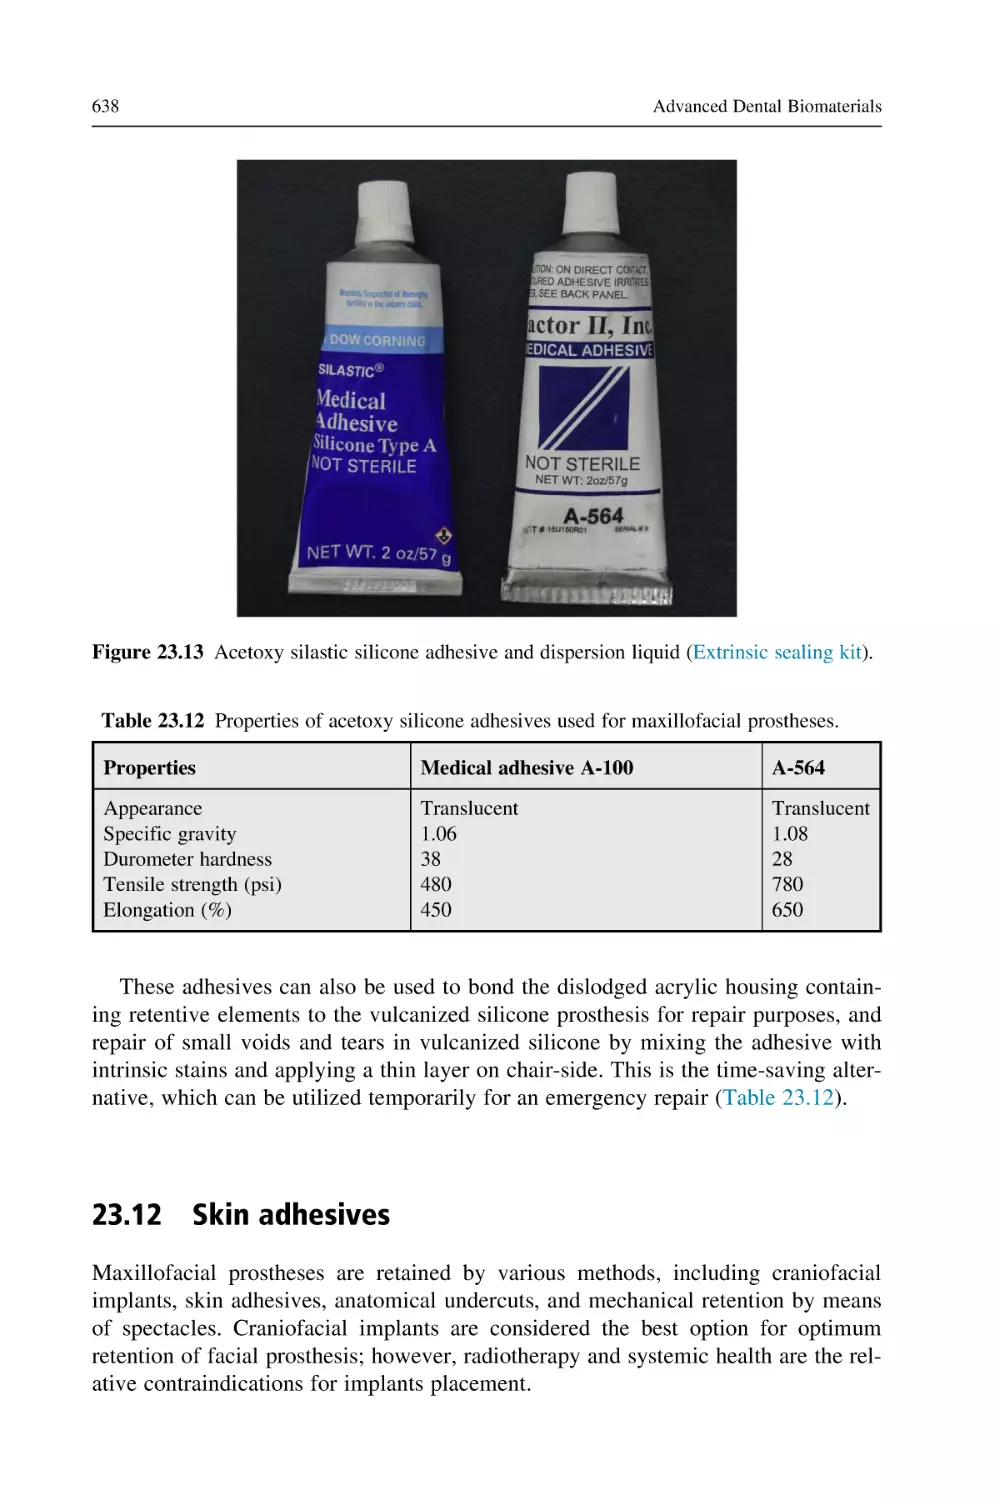 23.12 Skin adhesives